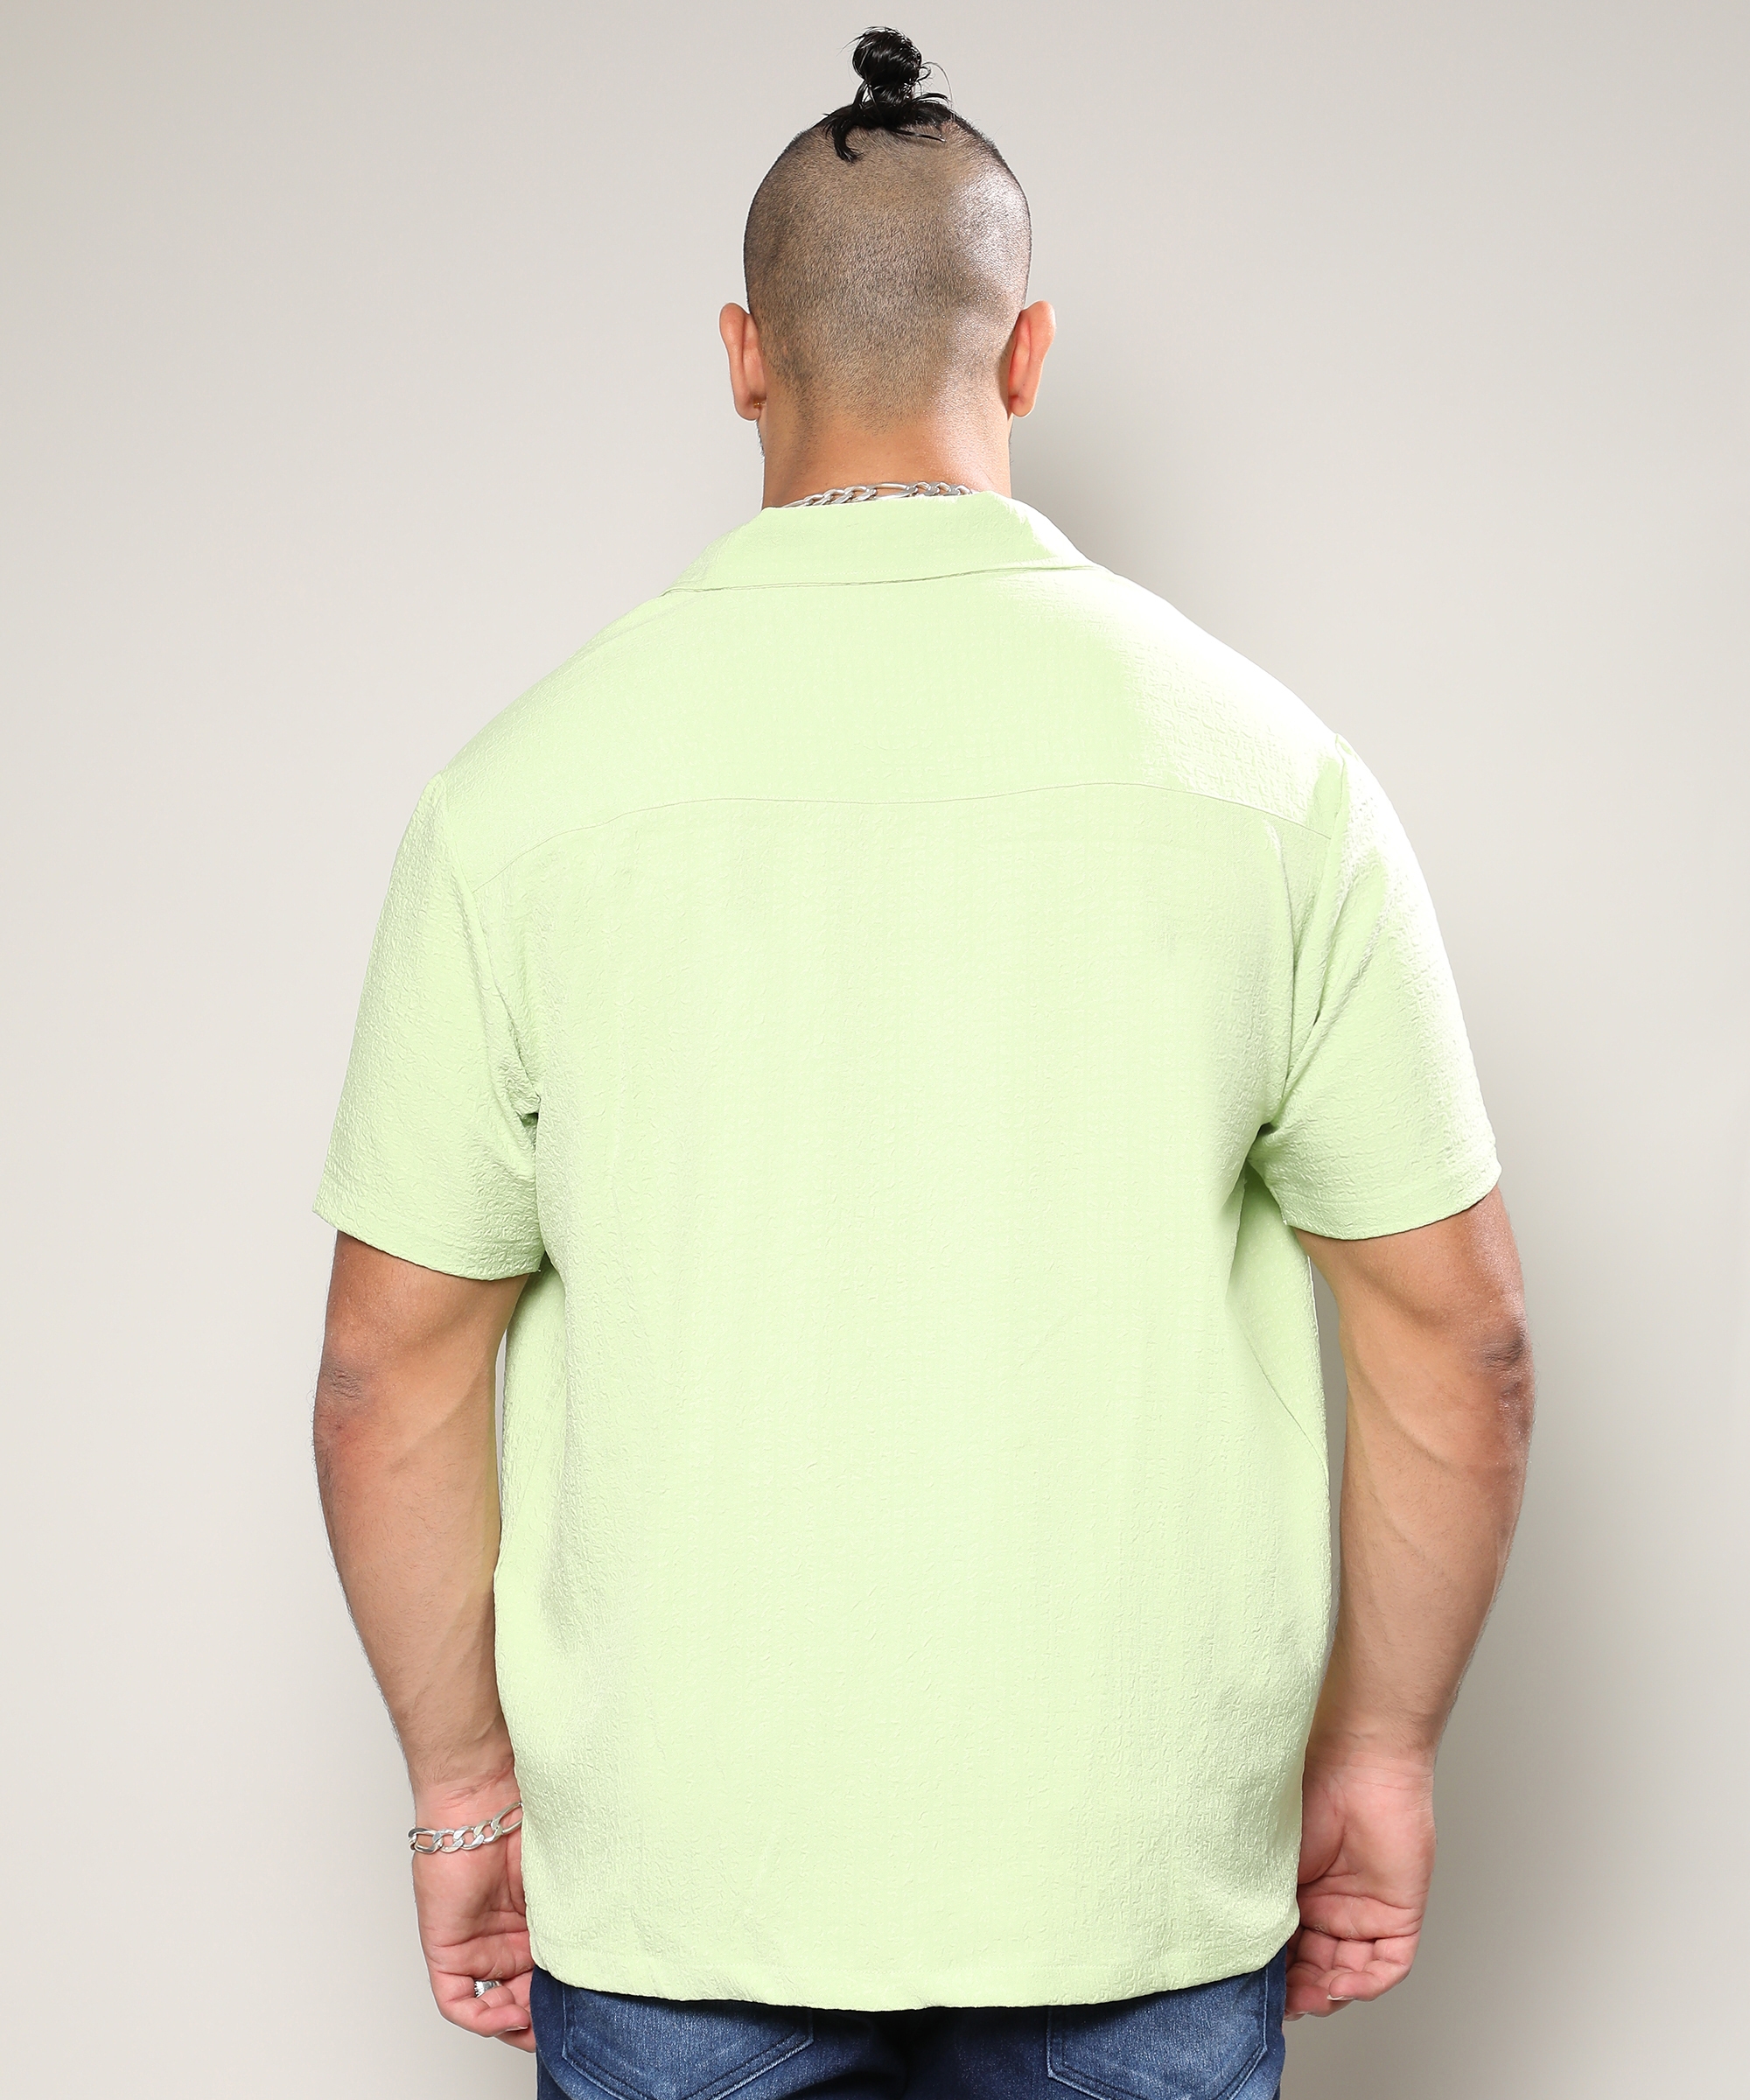 Men's Lime Green Creased Shirt